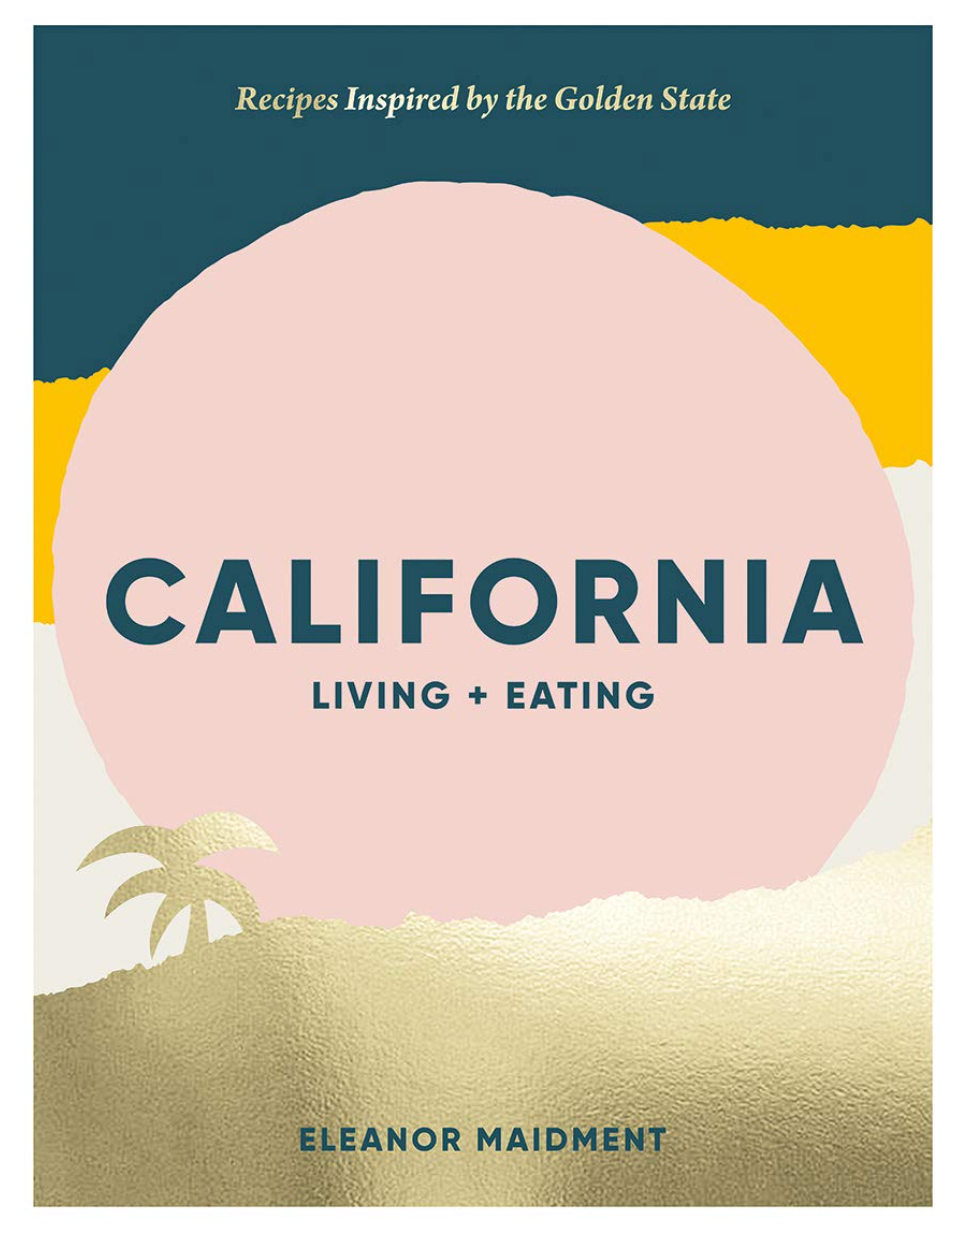 California: Living + Eating